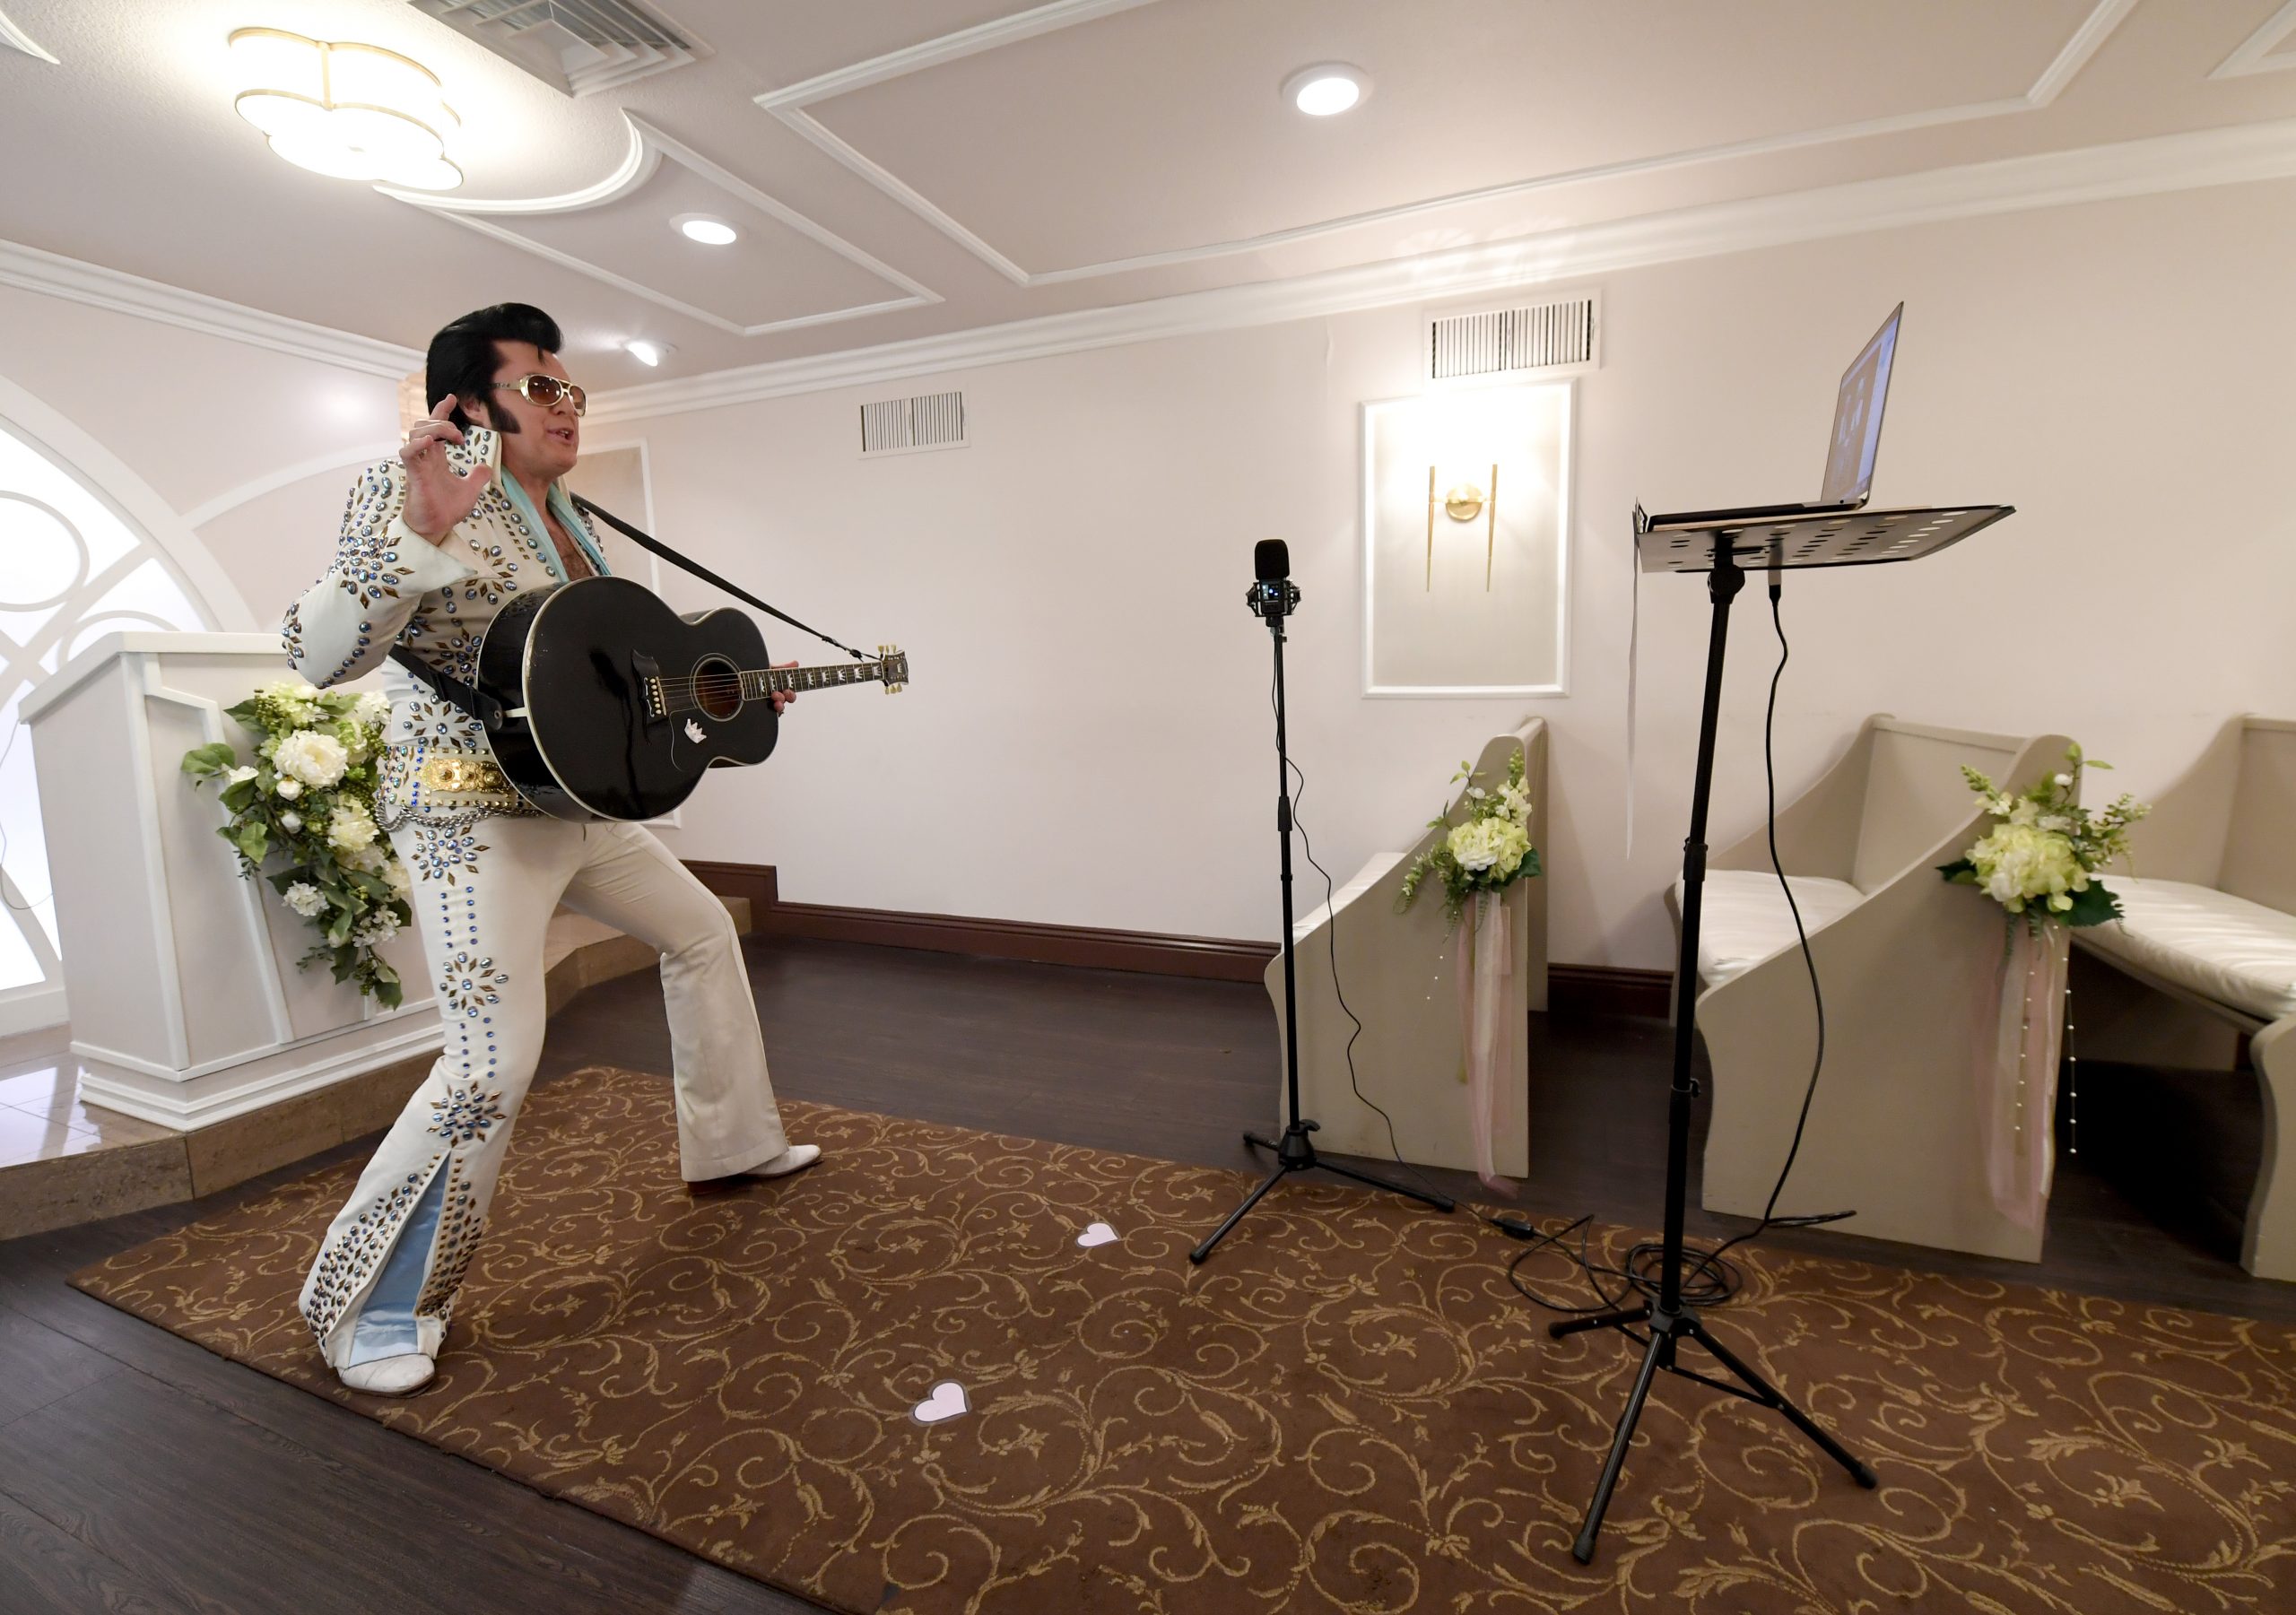 Las Vegas Wedding Chapel Performs Live Virtual Elvis Themed Vow Renewals Amid COVID 19 Pandemic